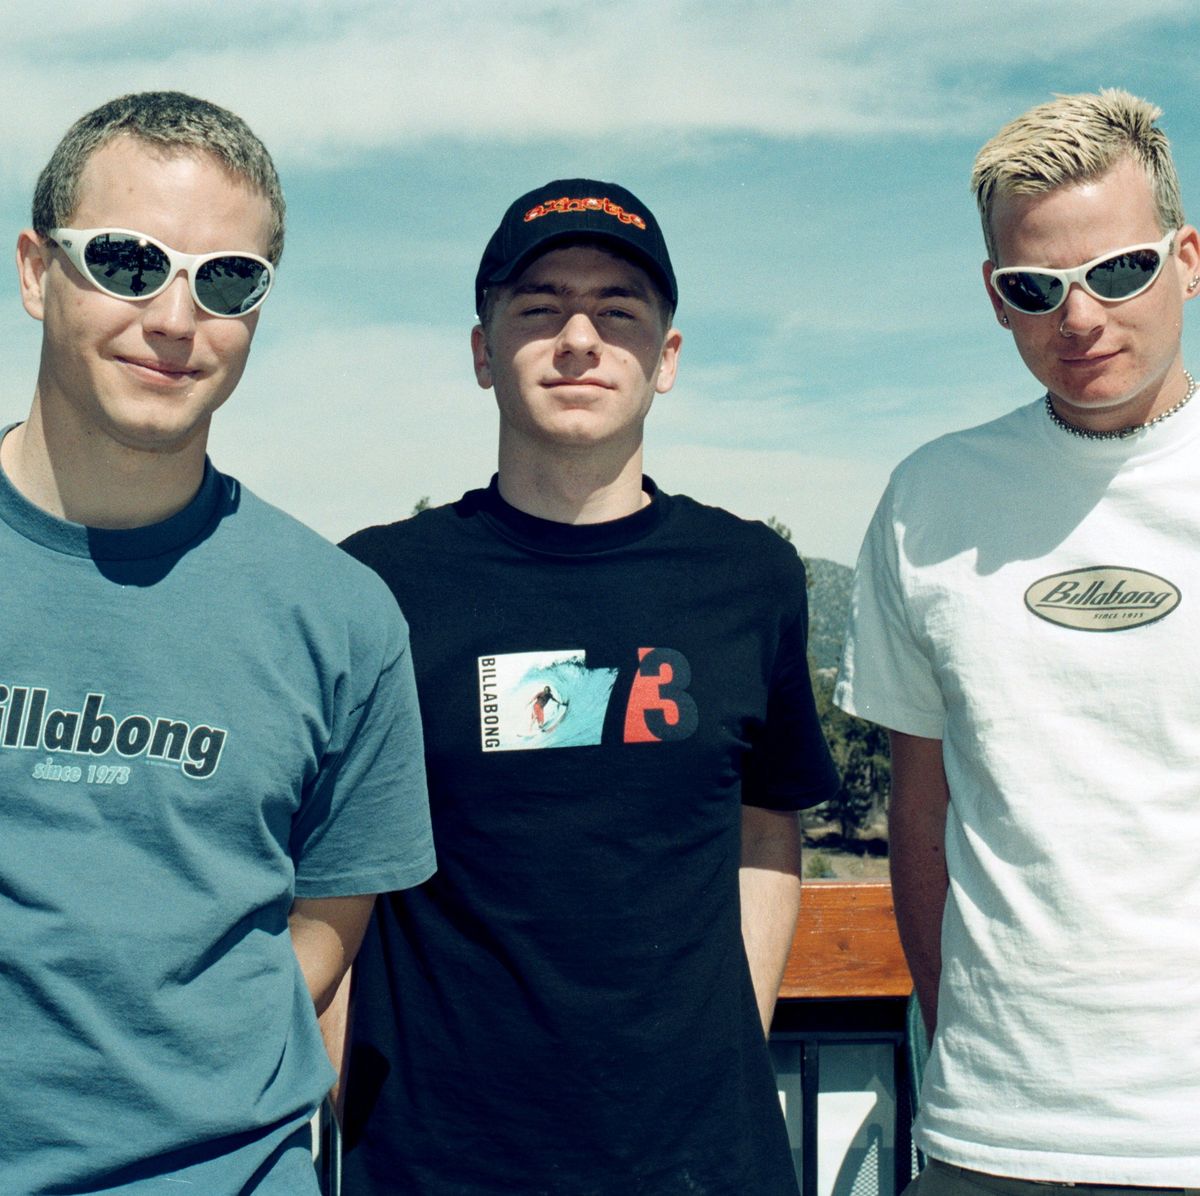 Blink-182 Reunion Details - New Album, Tour, Tom Delonge Explained